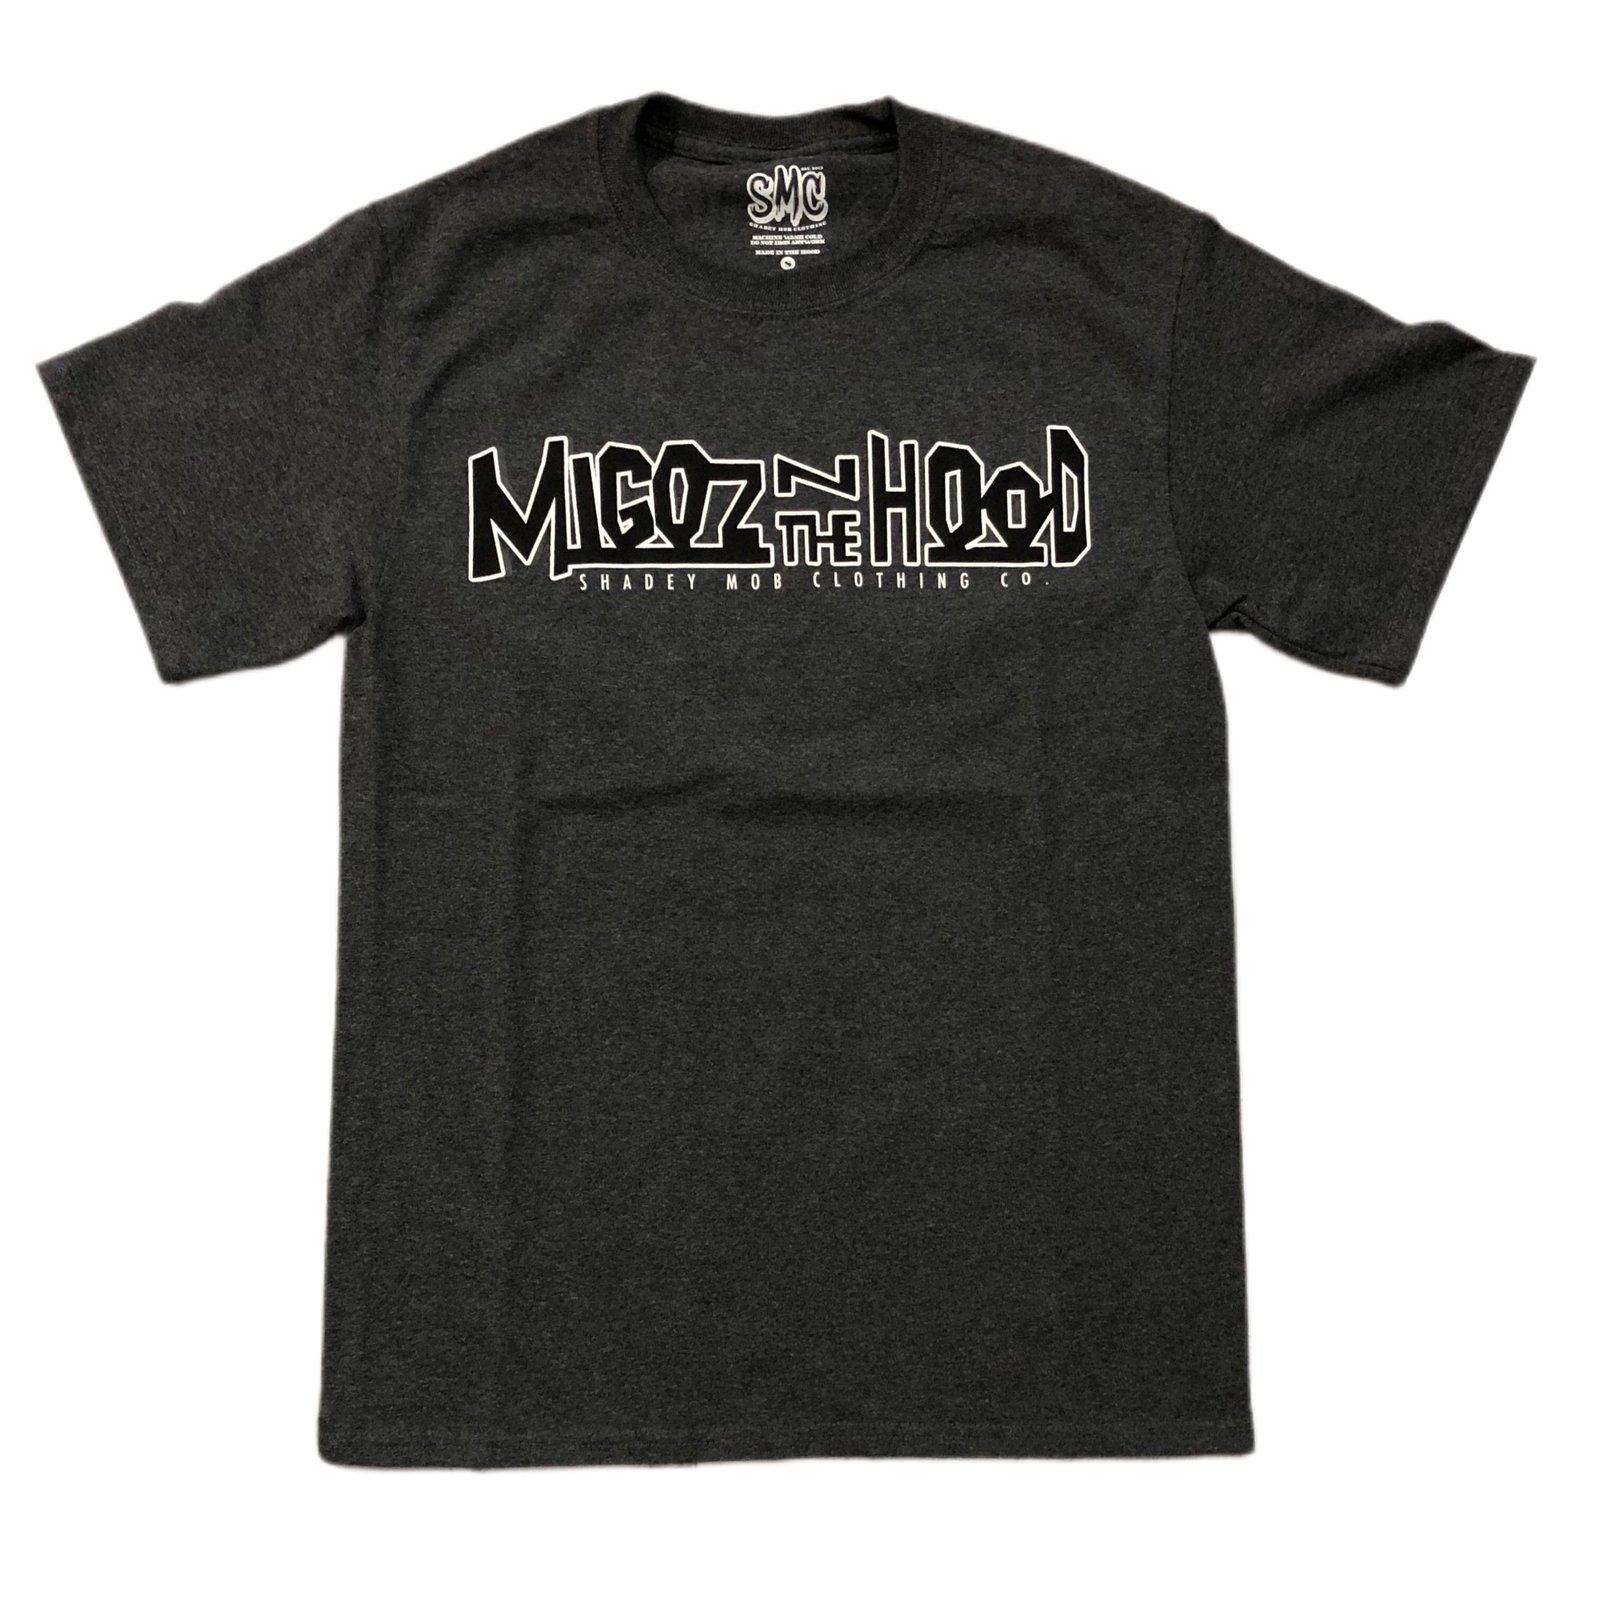 Migoz N The Hood shirt (Charcoal/Black) | Shadey Mob Clothing